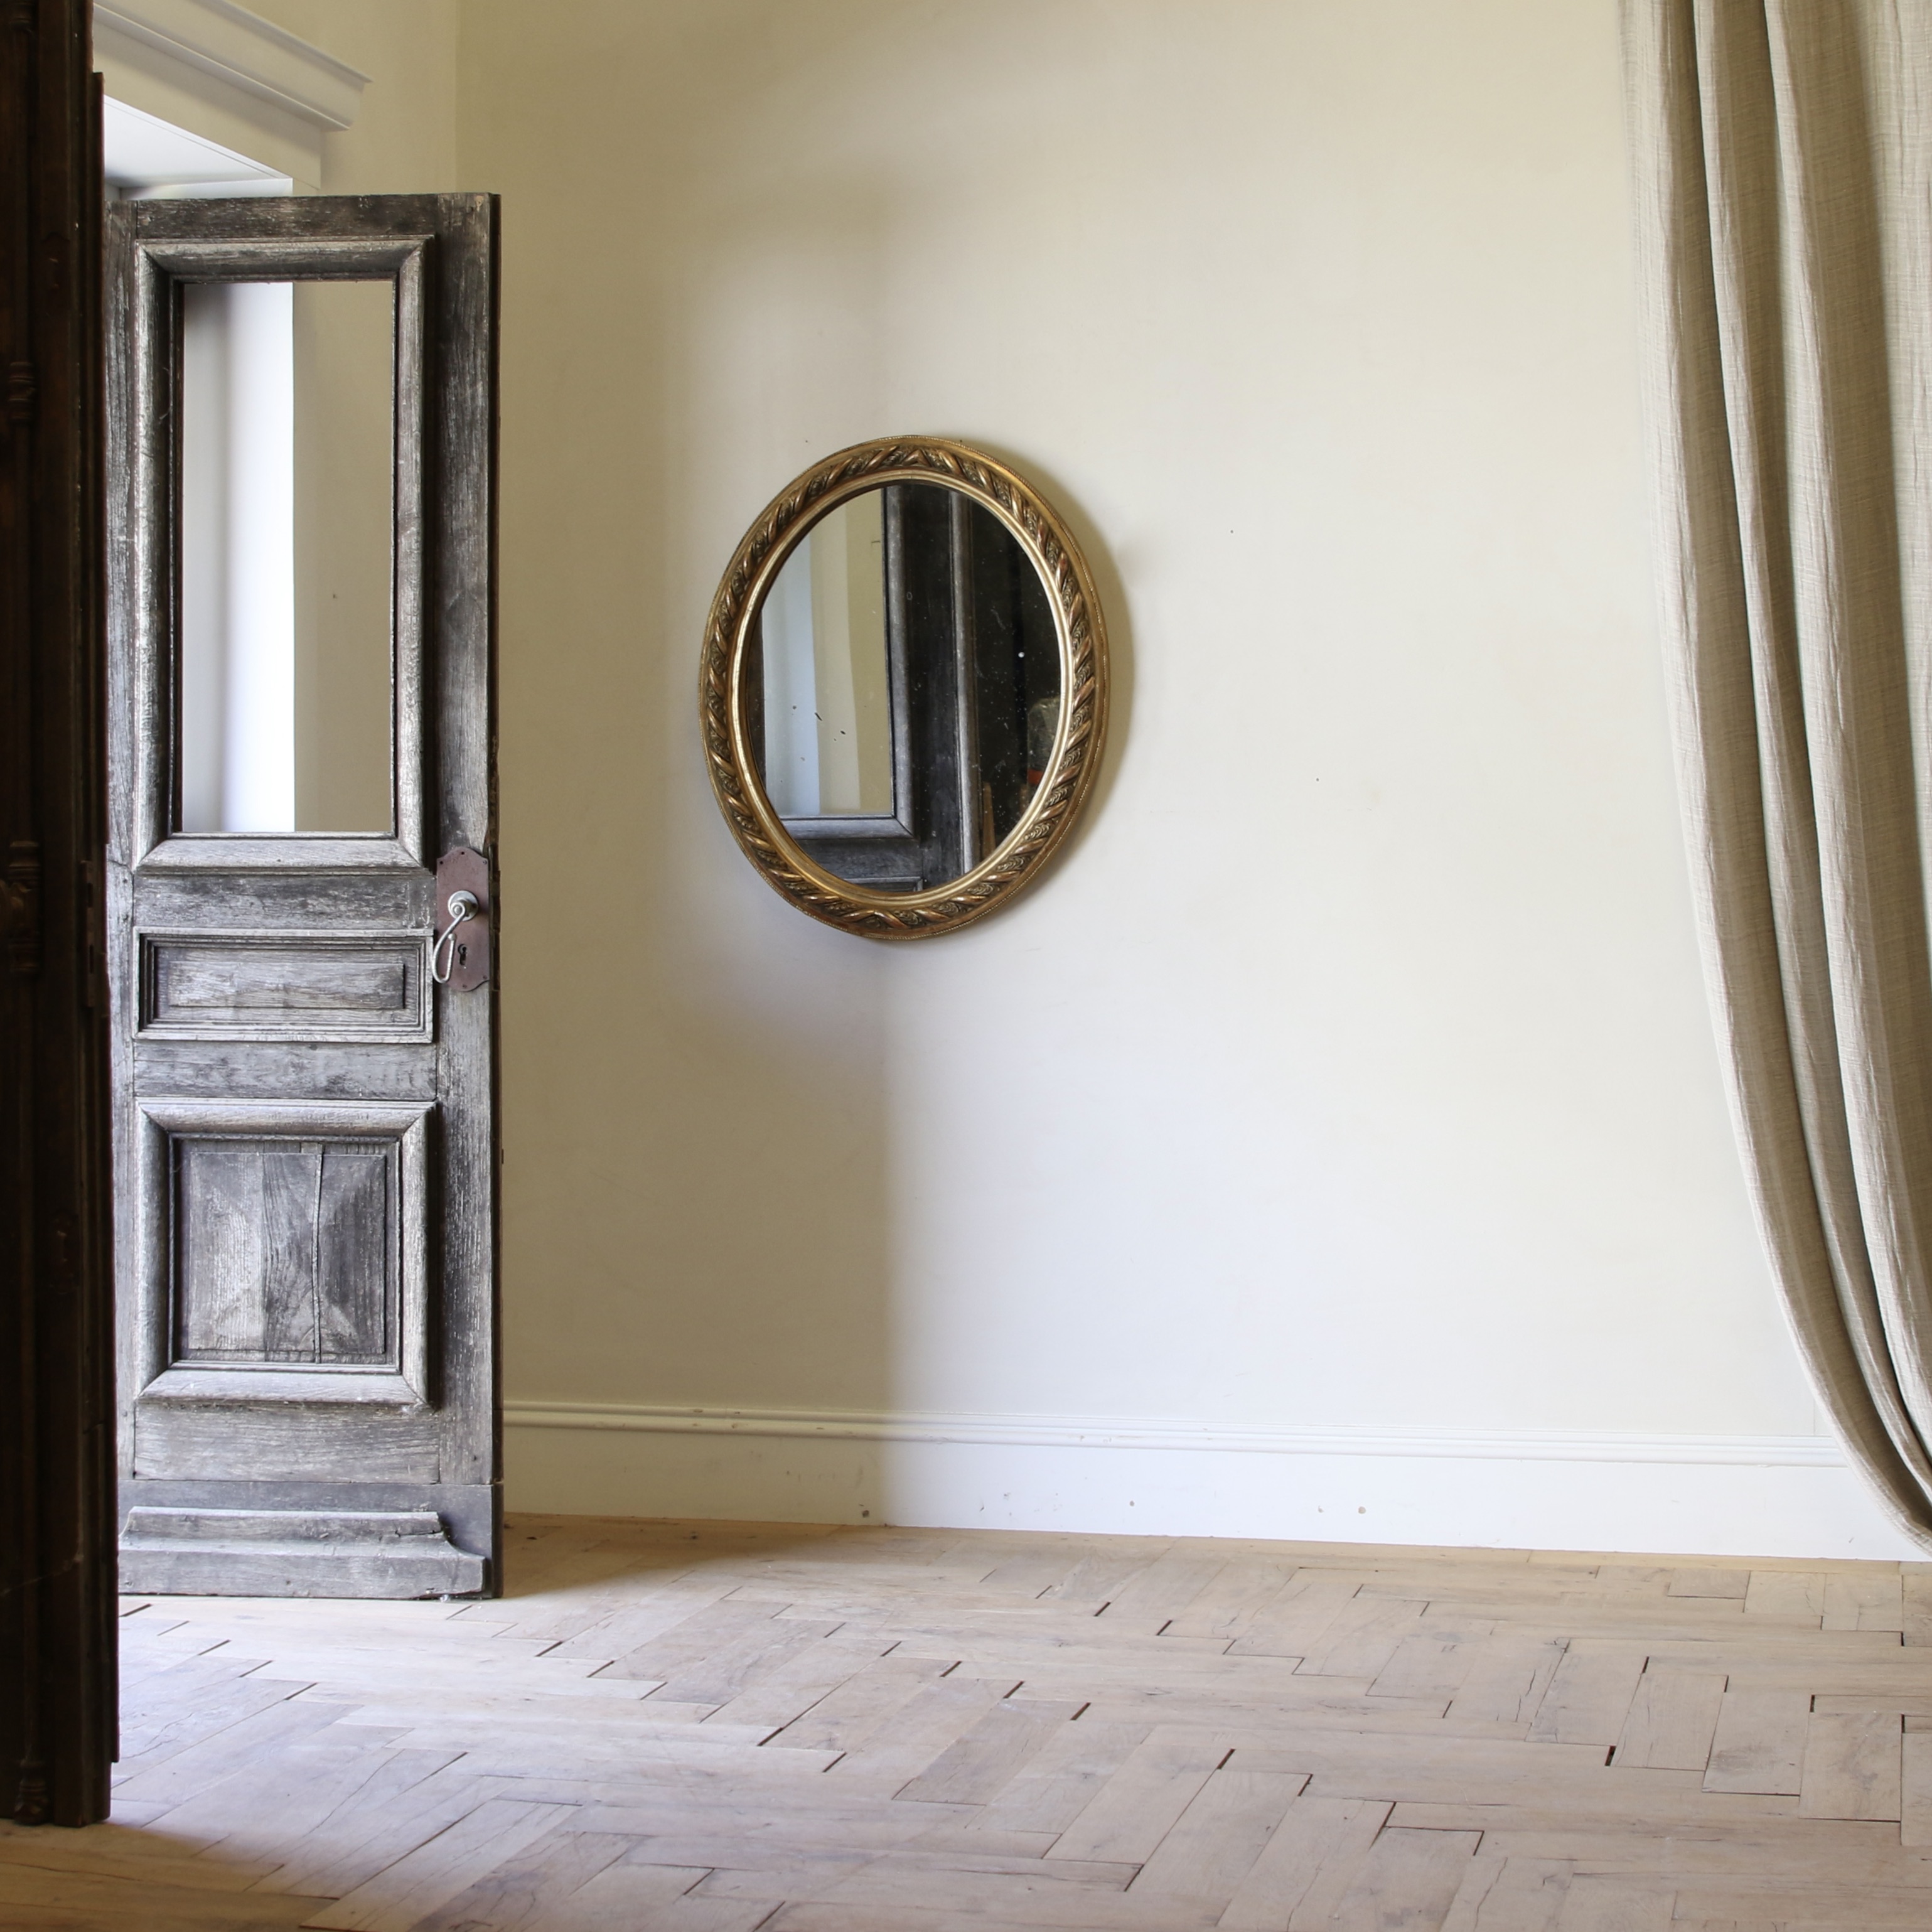 144-23 - A Decorative French Gilt Oval Mirror